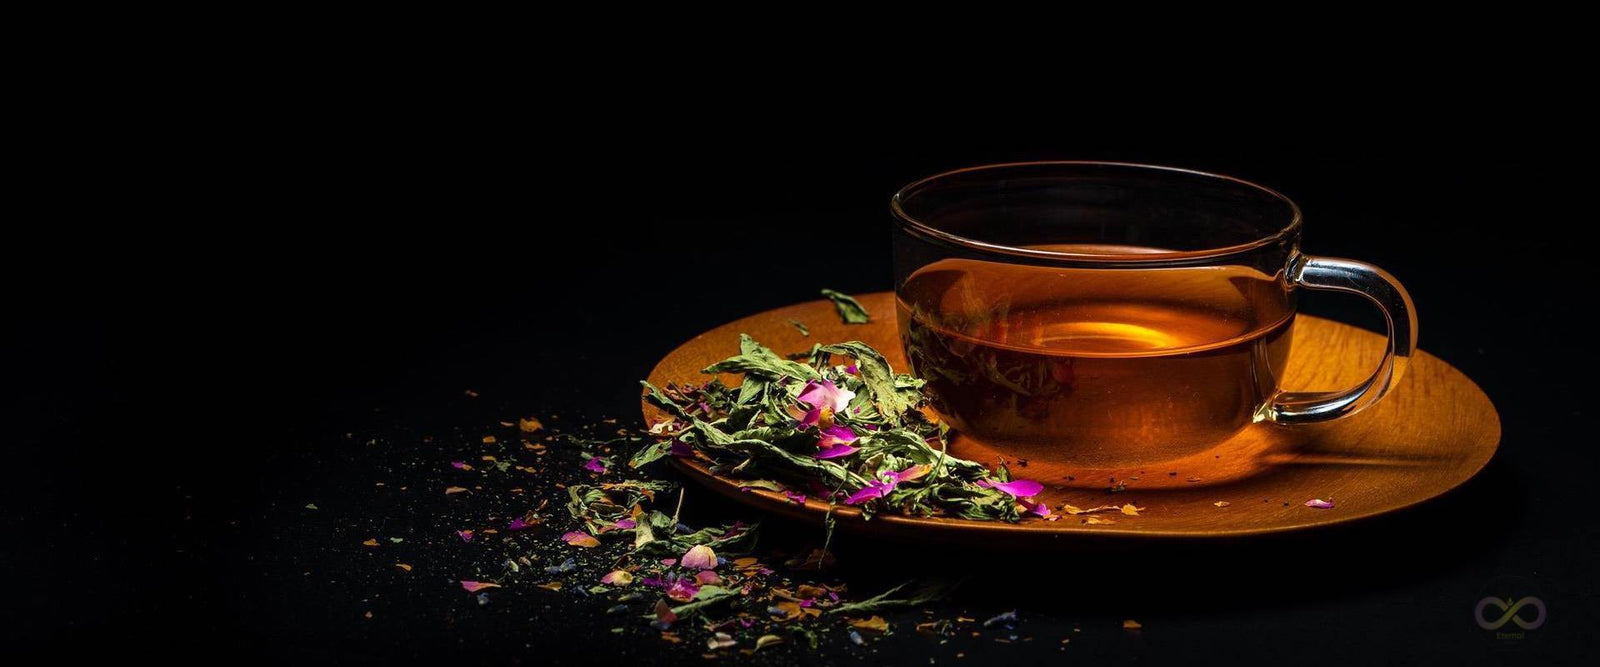 Let's meet EterBrain - What makes it an amazing tea!